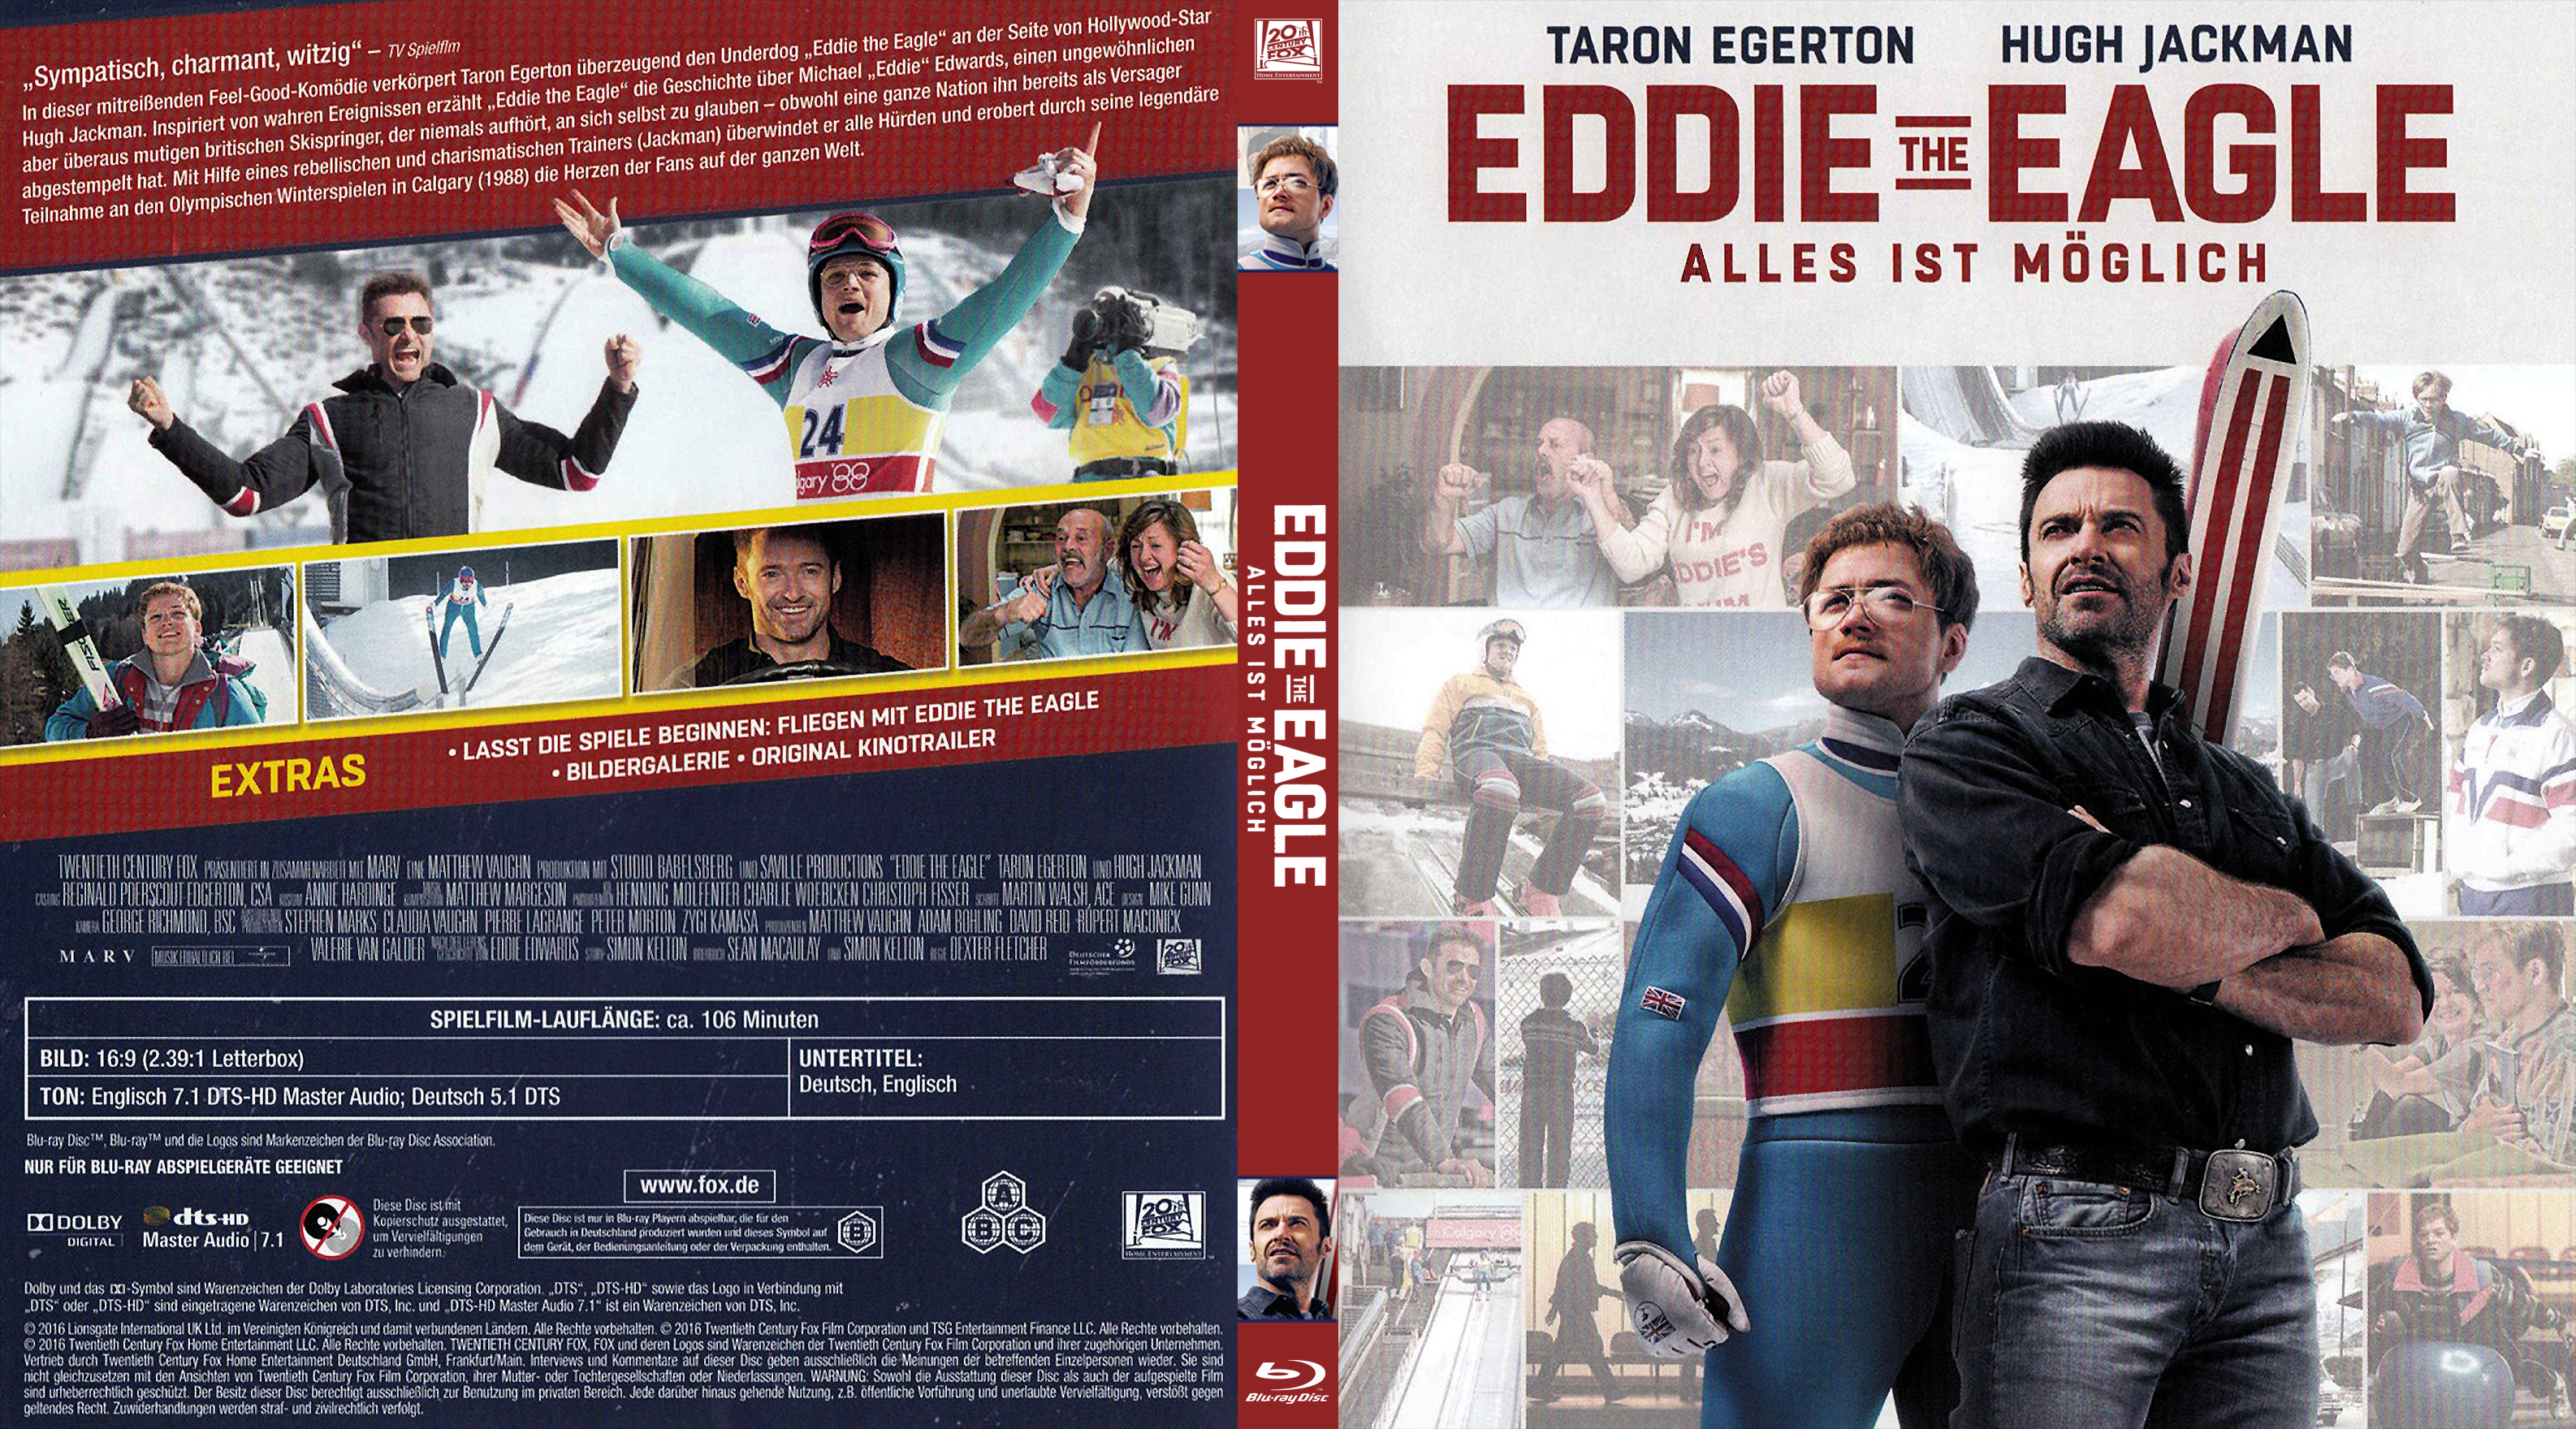 Alles ist ein. Eagle Eye (2008) Blu ray Cover. Эдди Орел гиф. The Eagle, 2011 DVD Covers. Эдди «Орел» (Blu-ray).